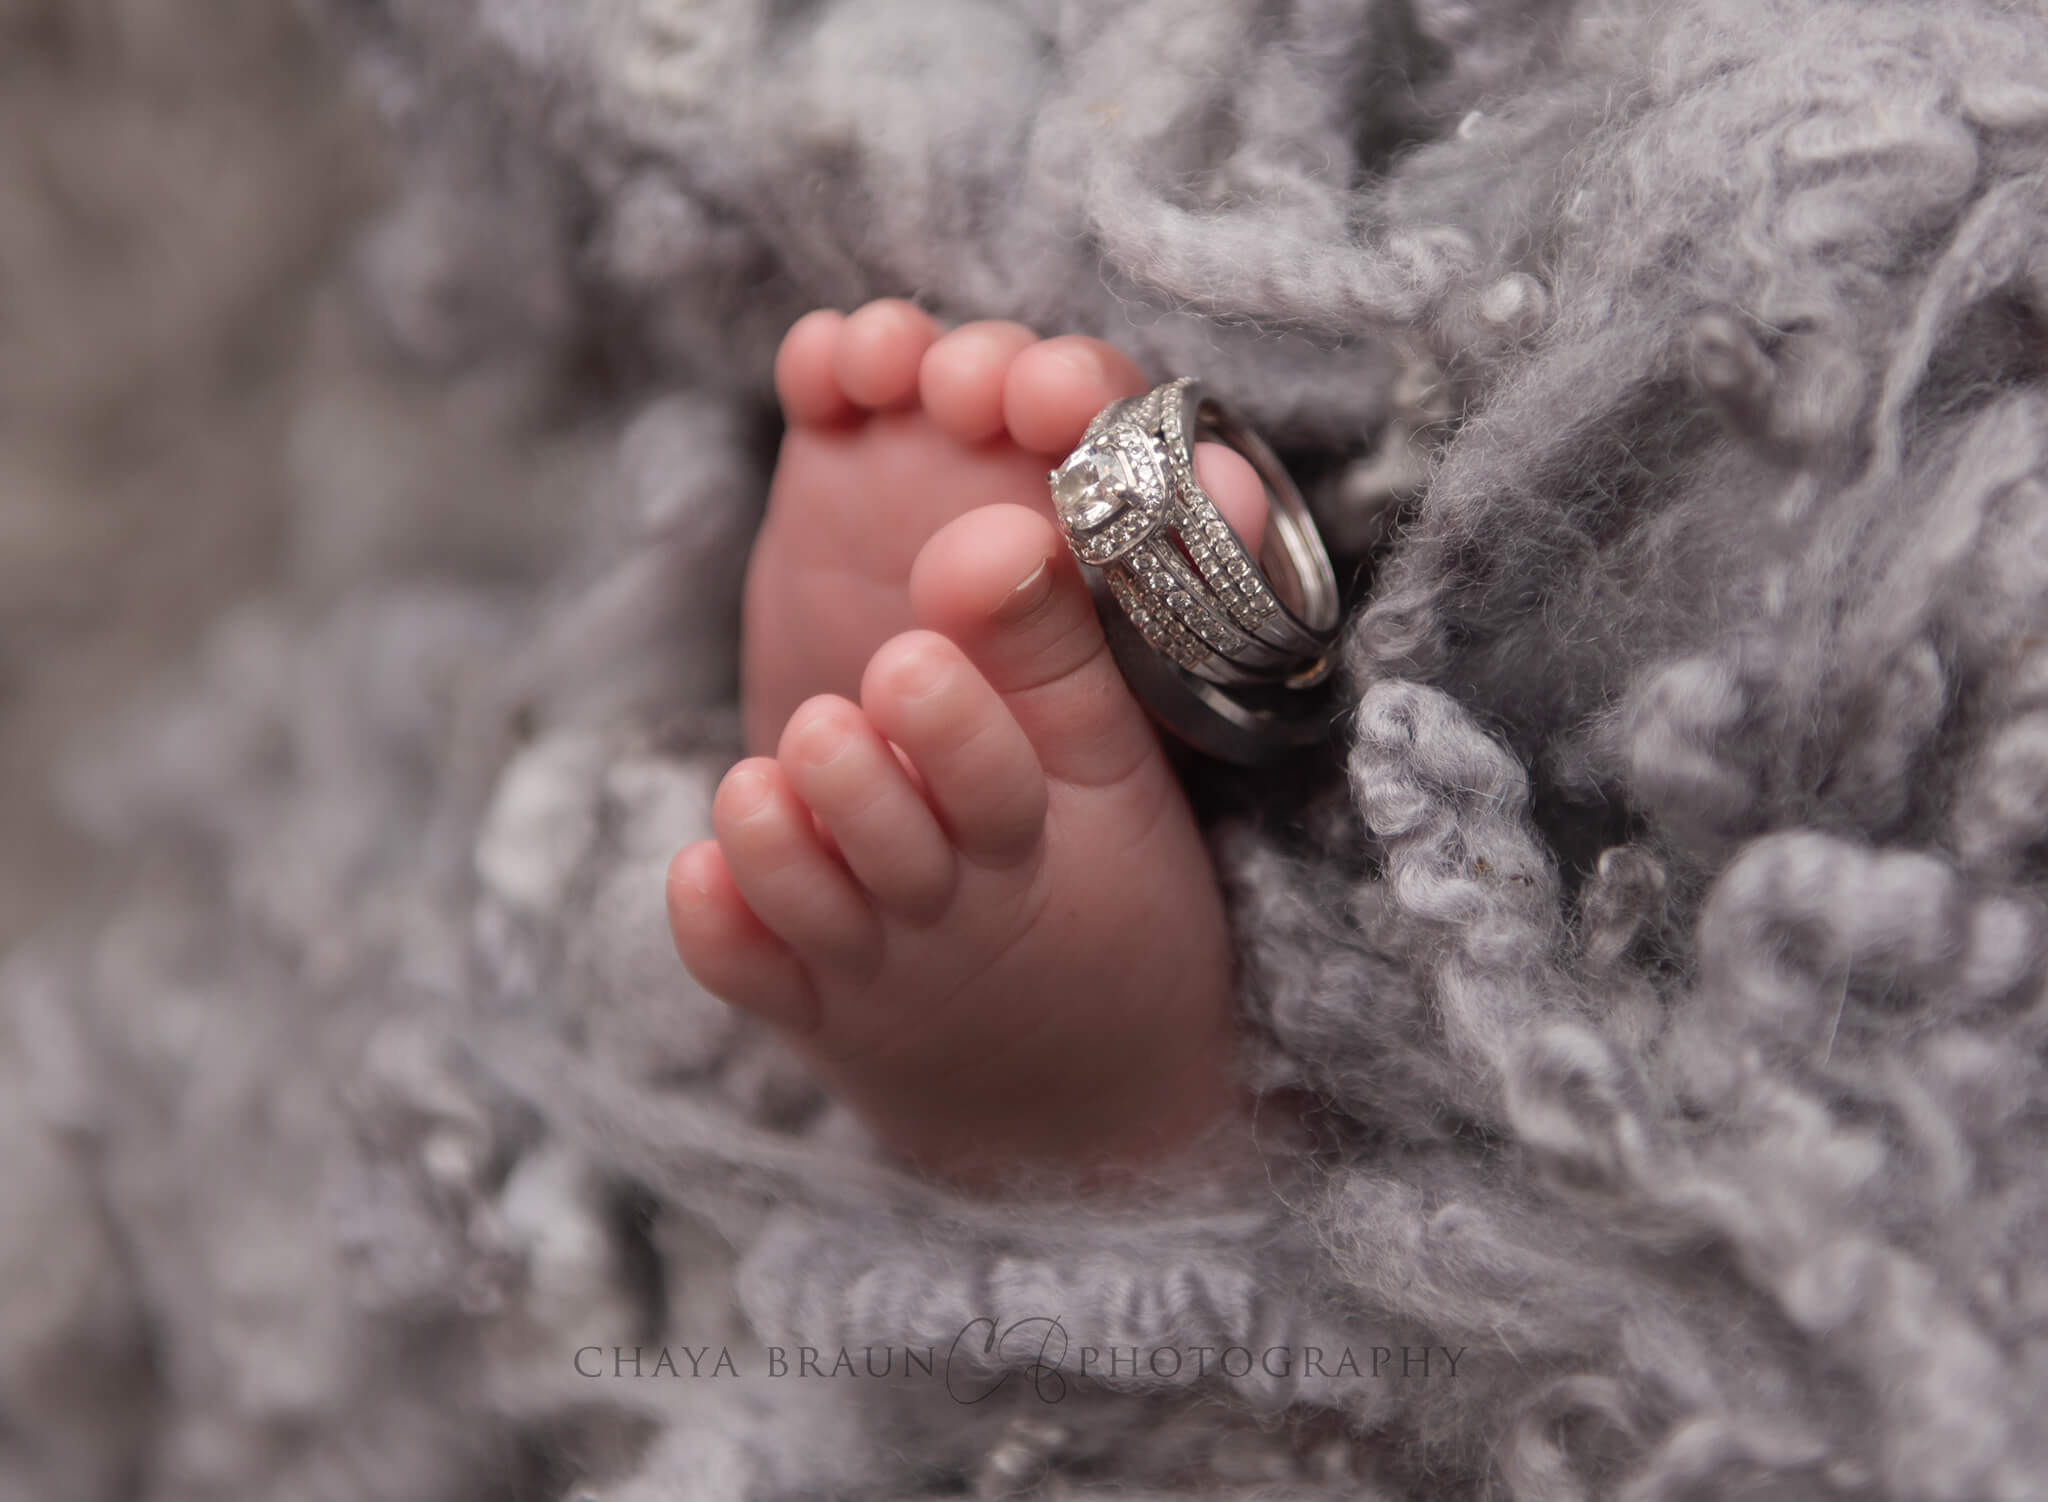 newborn baby with wedding rings